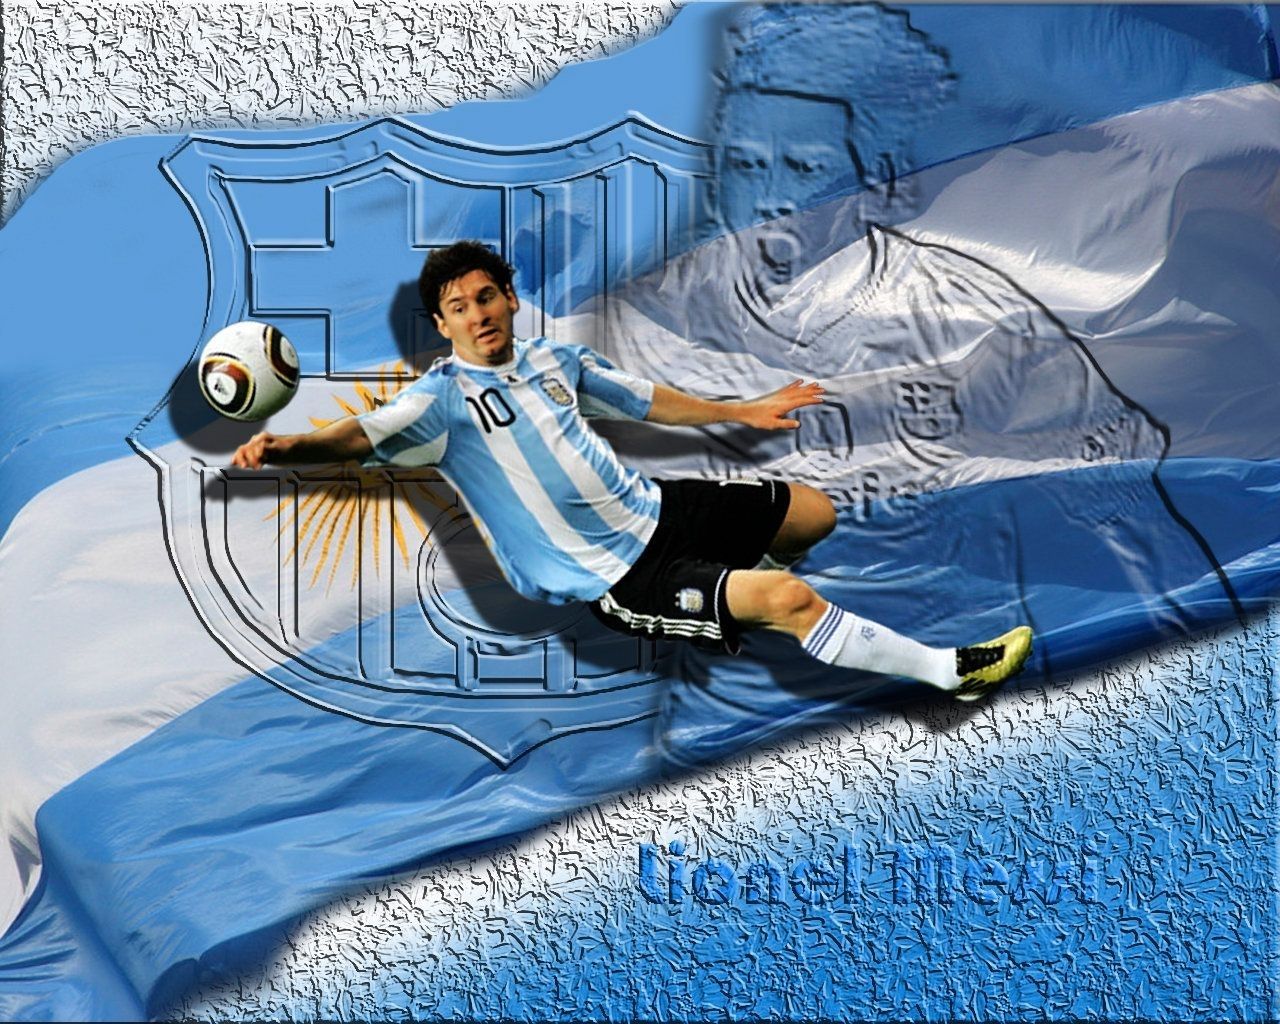 10 La última bandera de Argentina con Messi FULL HD 1920 × 1080 para PC